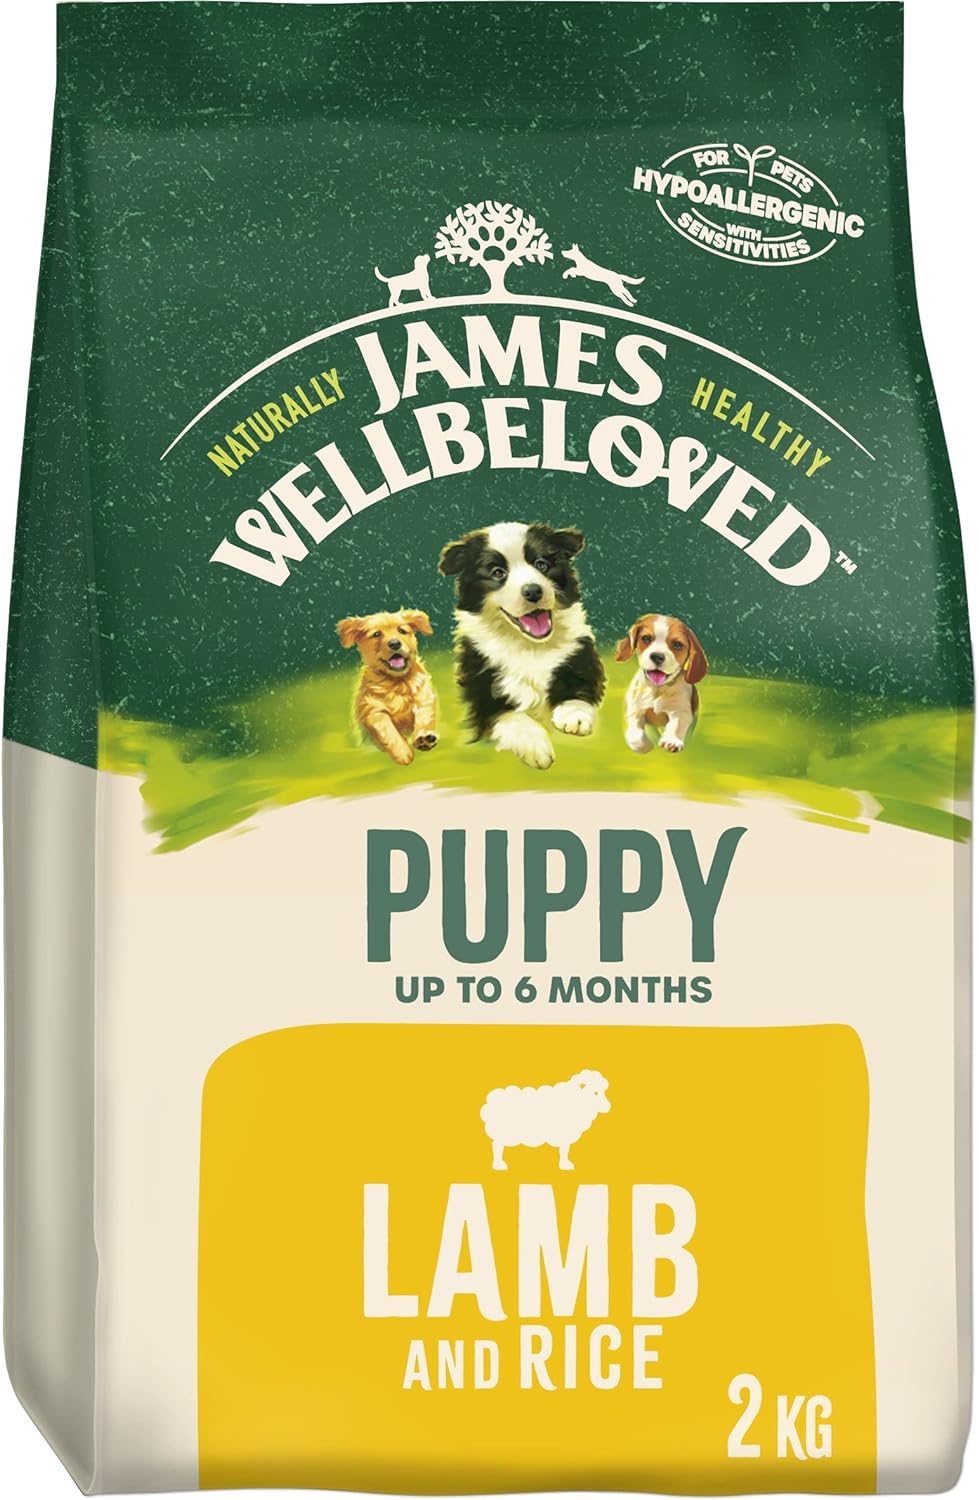 James Wellbeloved Puppy Lamb & Rice 2 kg Bag, Hypoallergenic Dry Dog Food?02JPL21